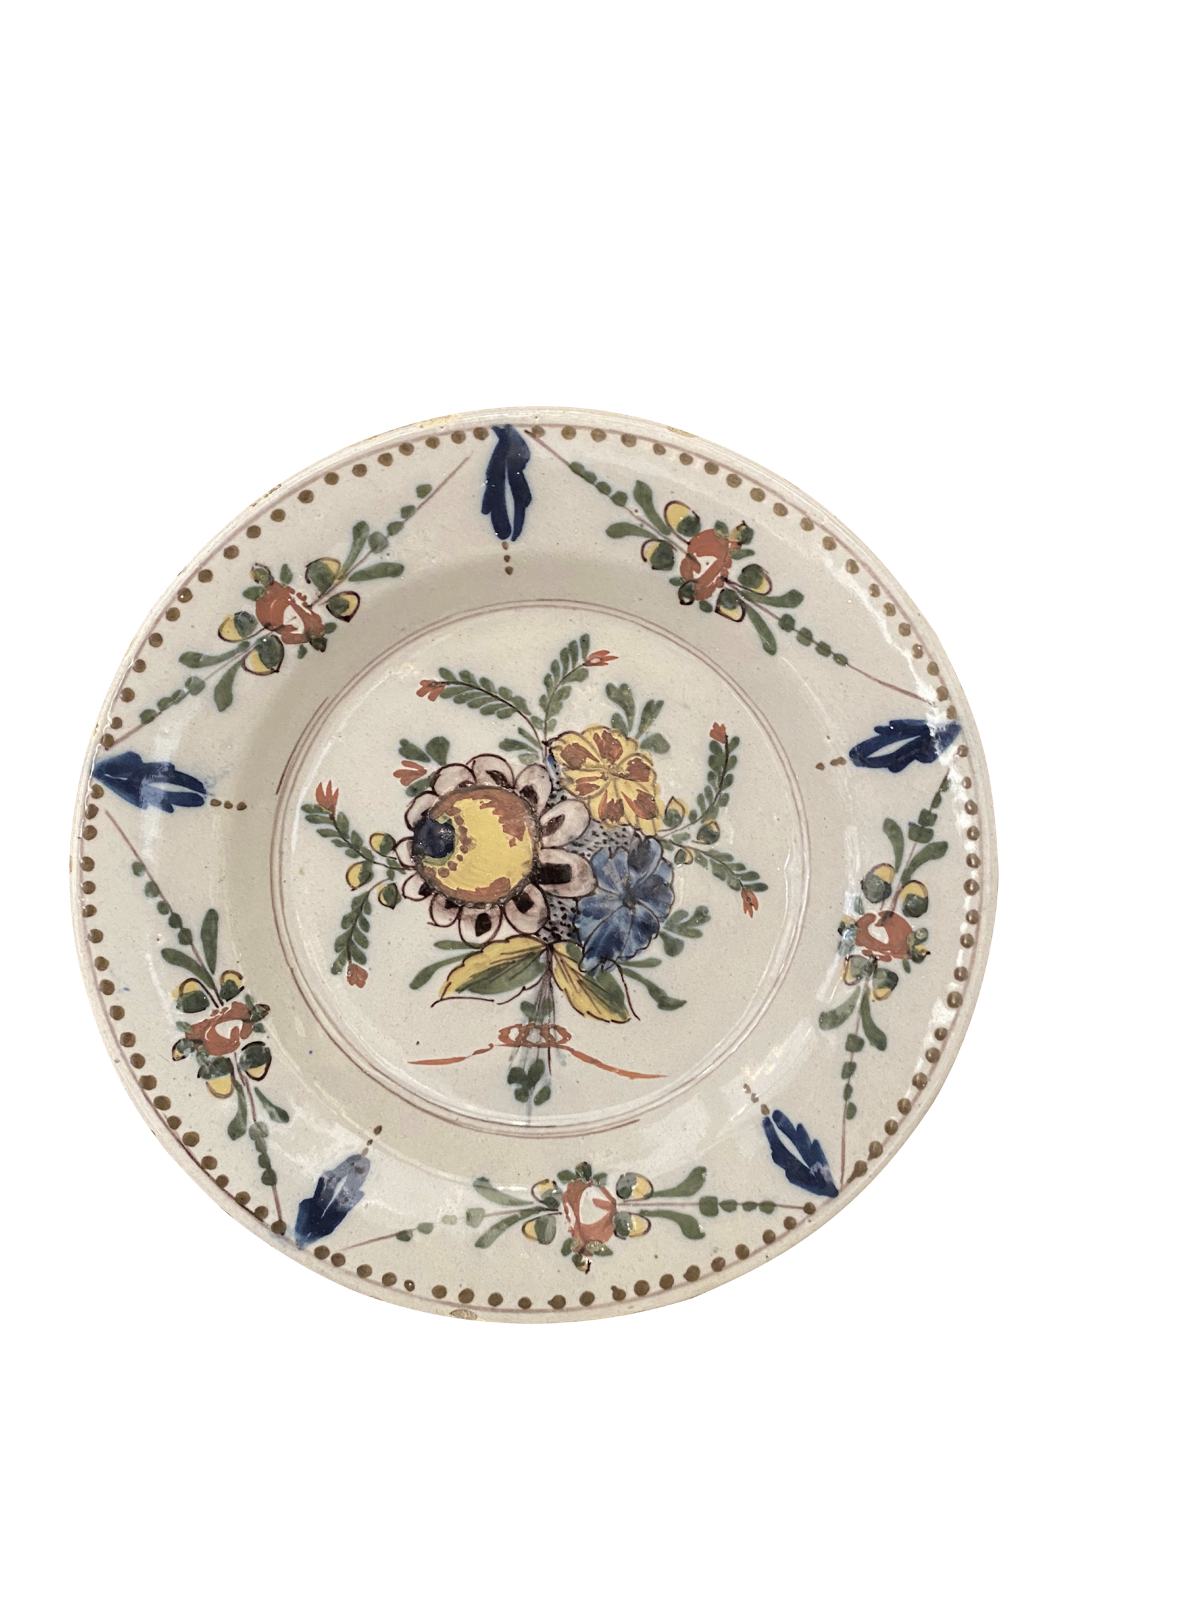 18th Century Dutch Delft Polychrome plate